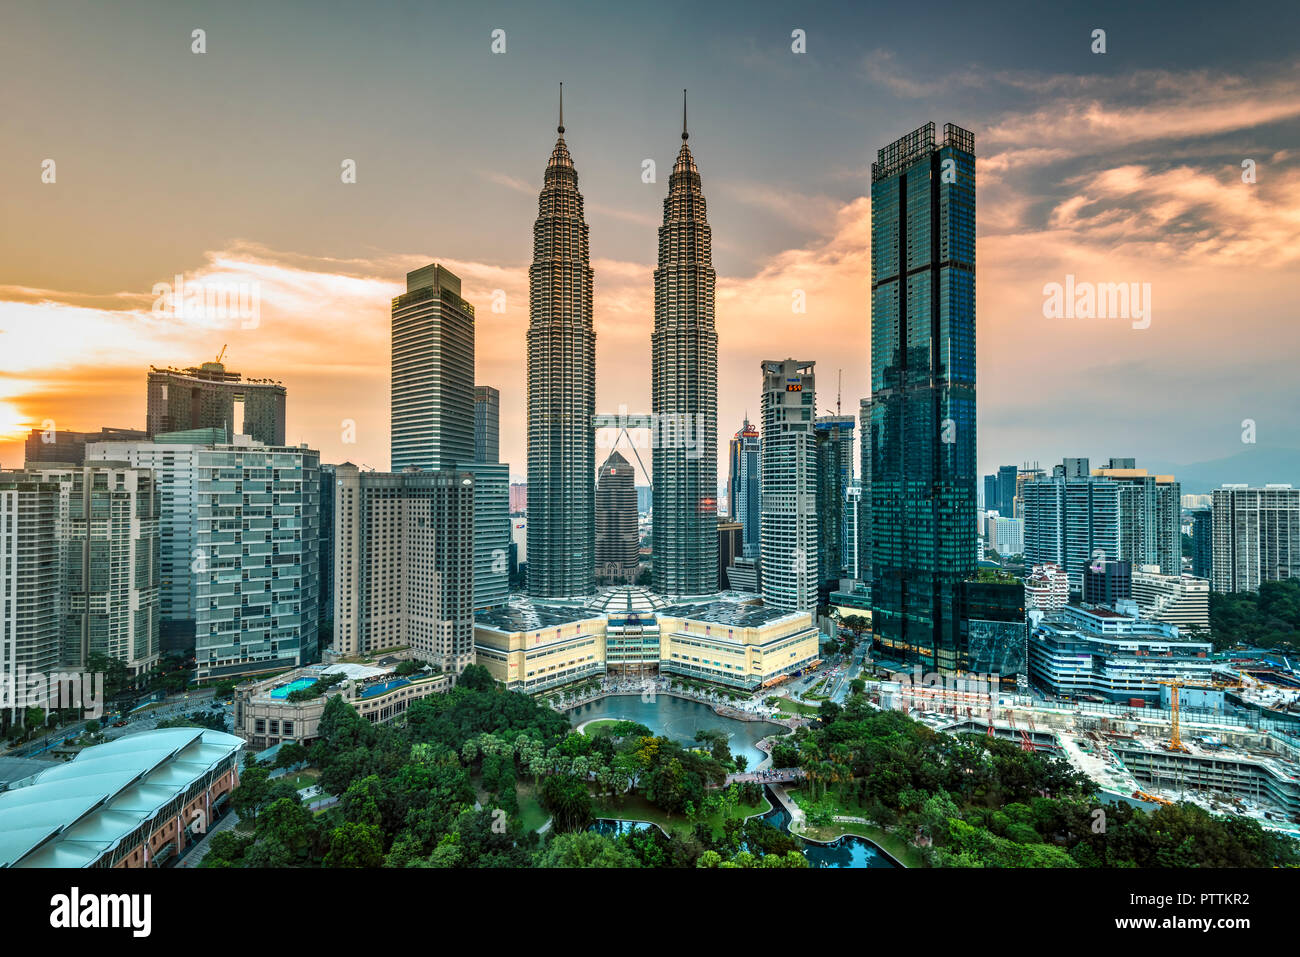 City skyline with Petronas Towers at sunset, Kuala Lumpur, Malaysia Stock Photo